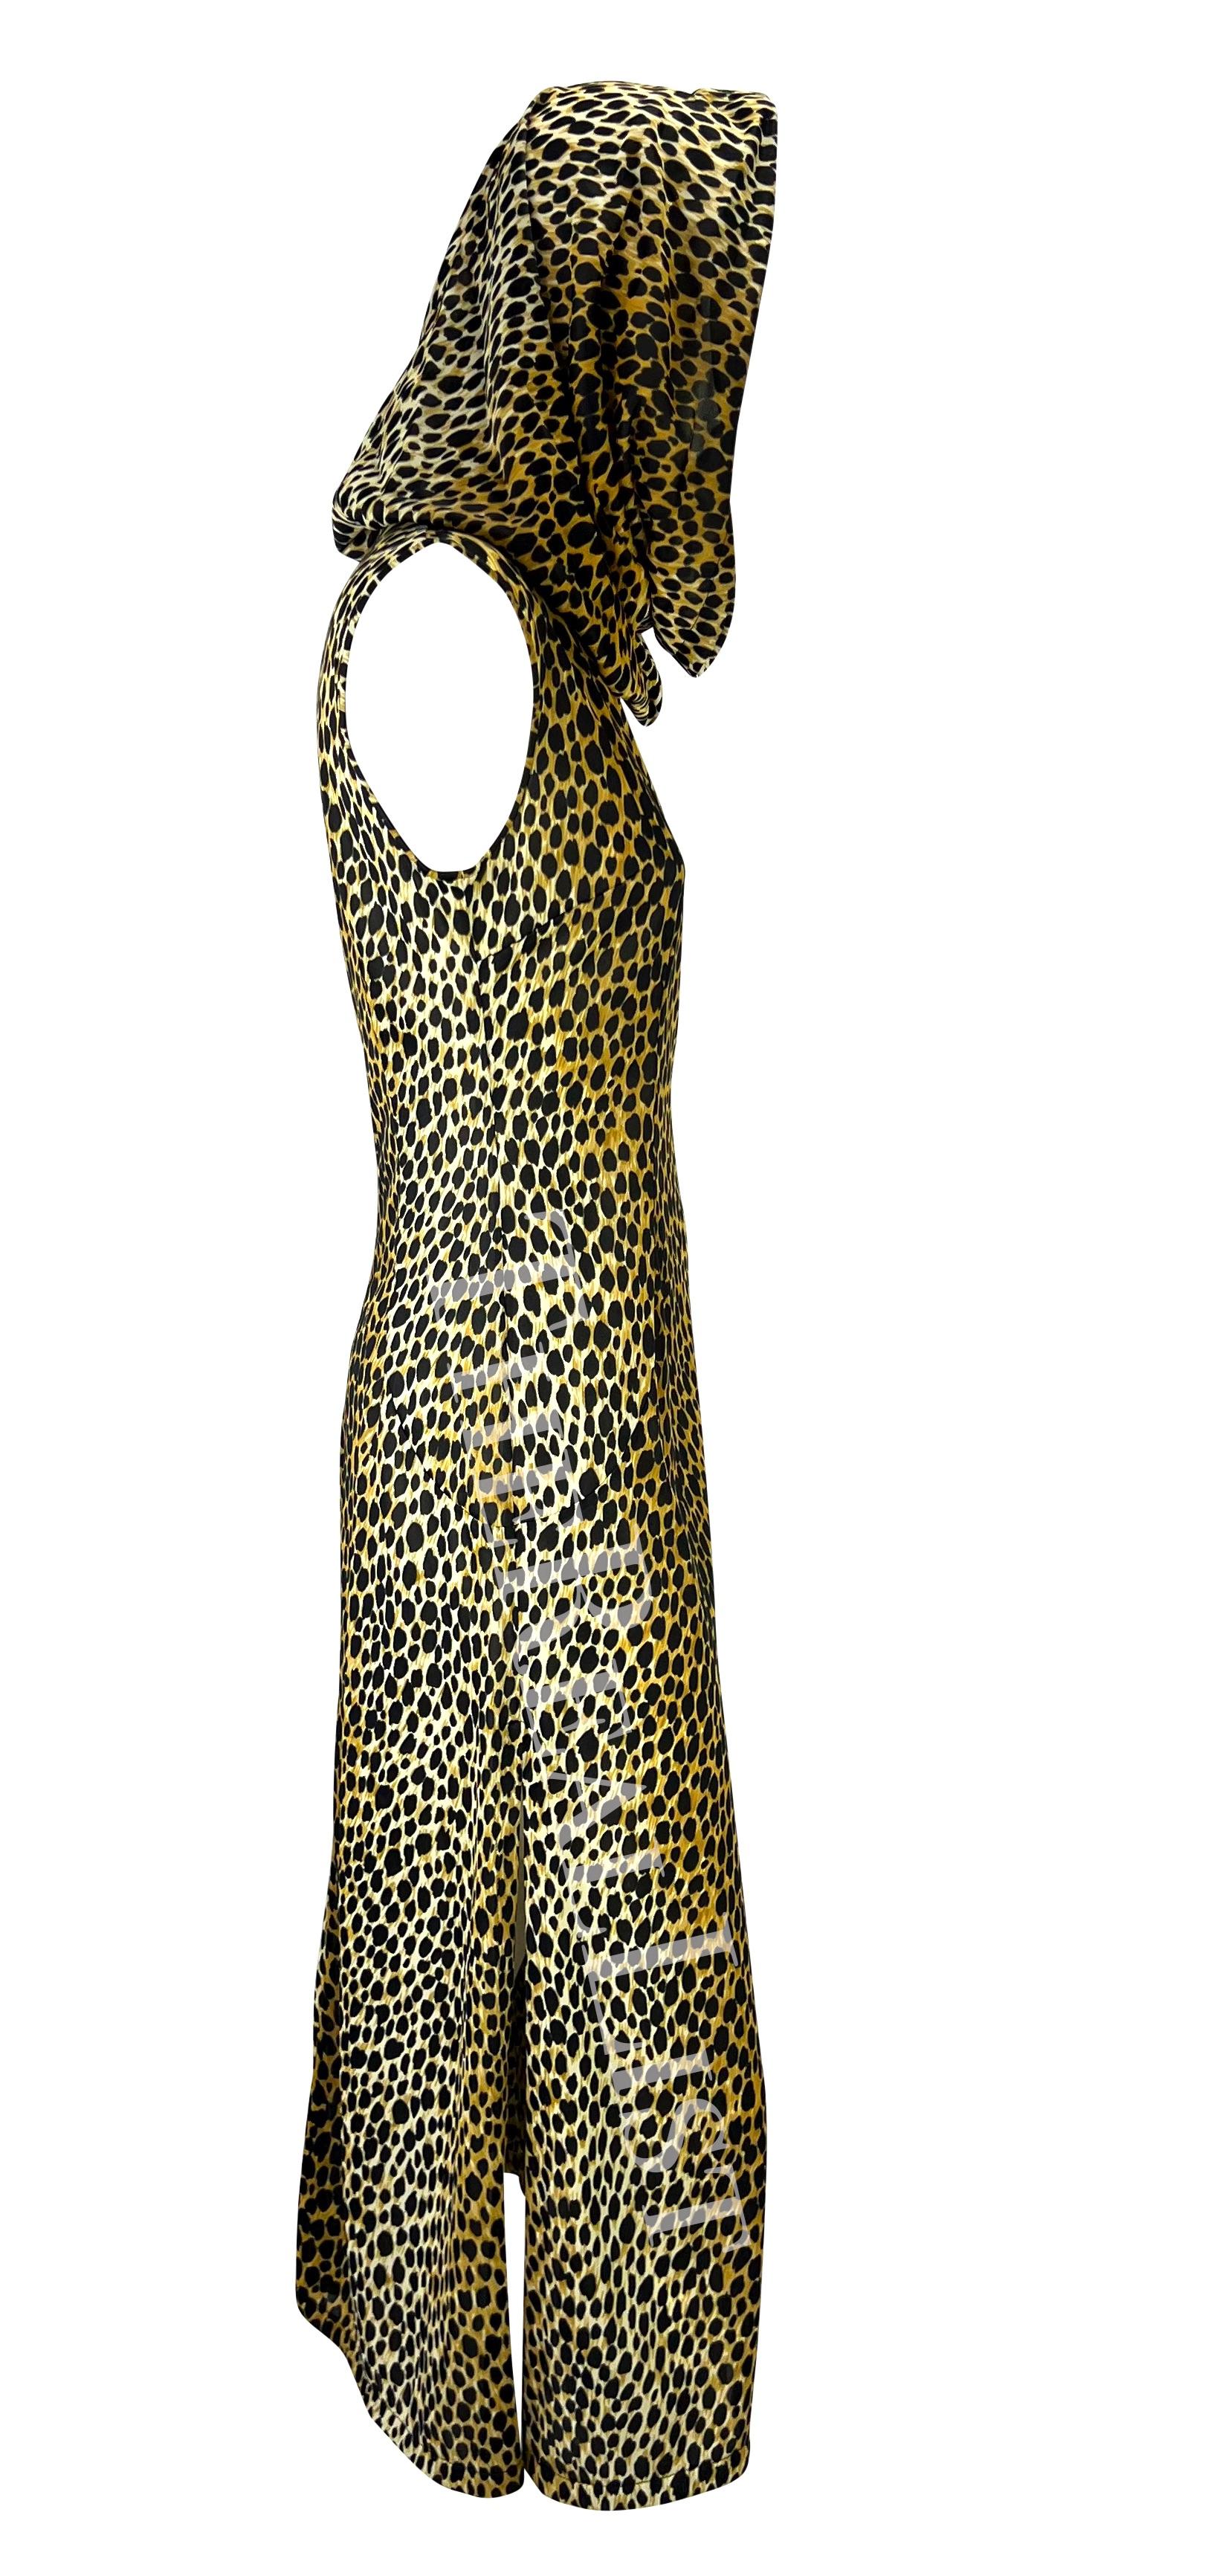 S/S 1996 Dolce & Gabbana Hooded Stretch Leopard Print Hit Slit Dress For Sale 5